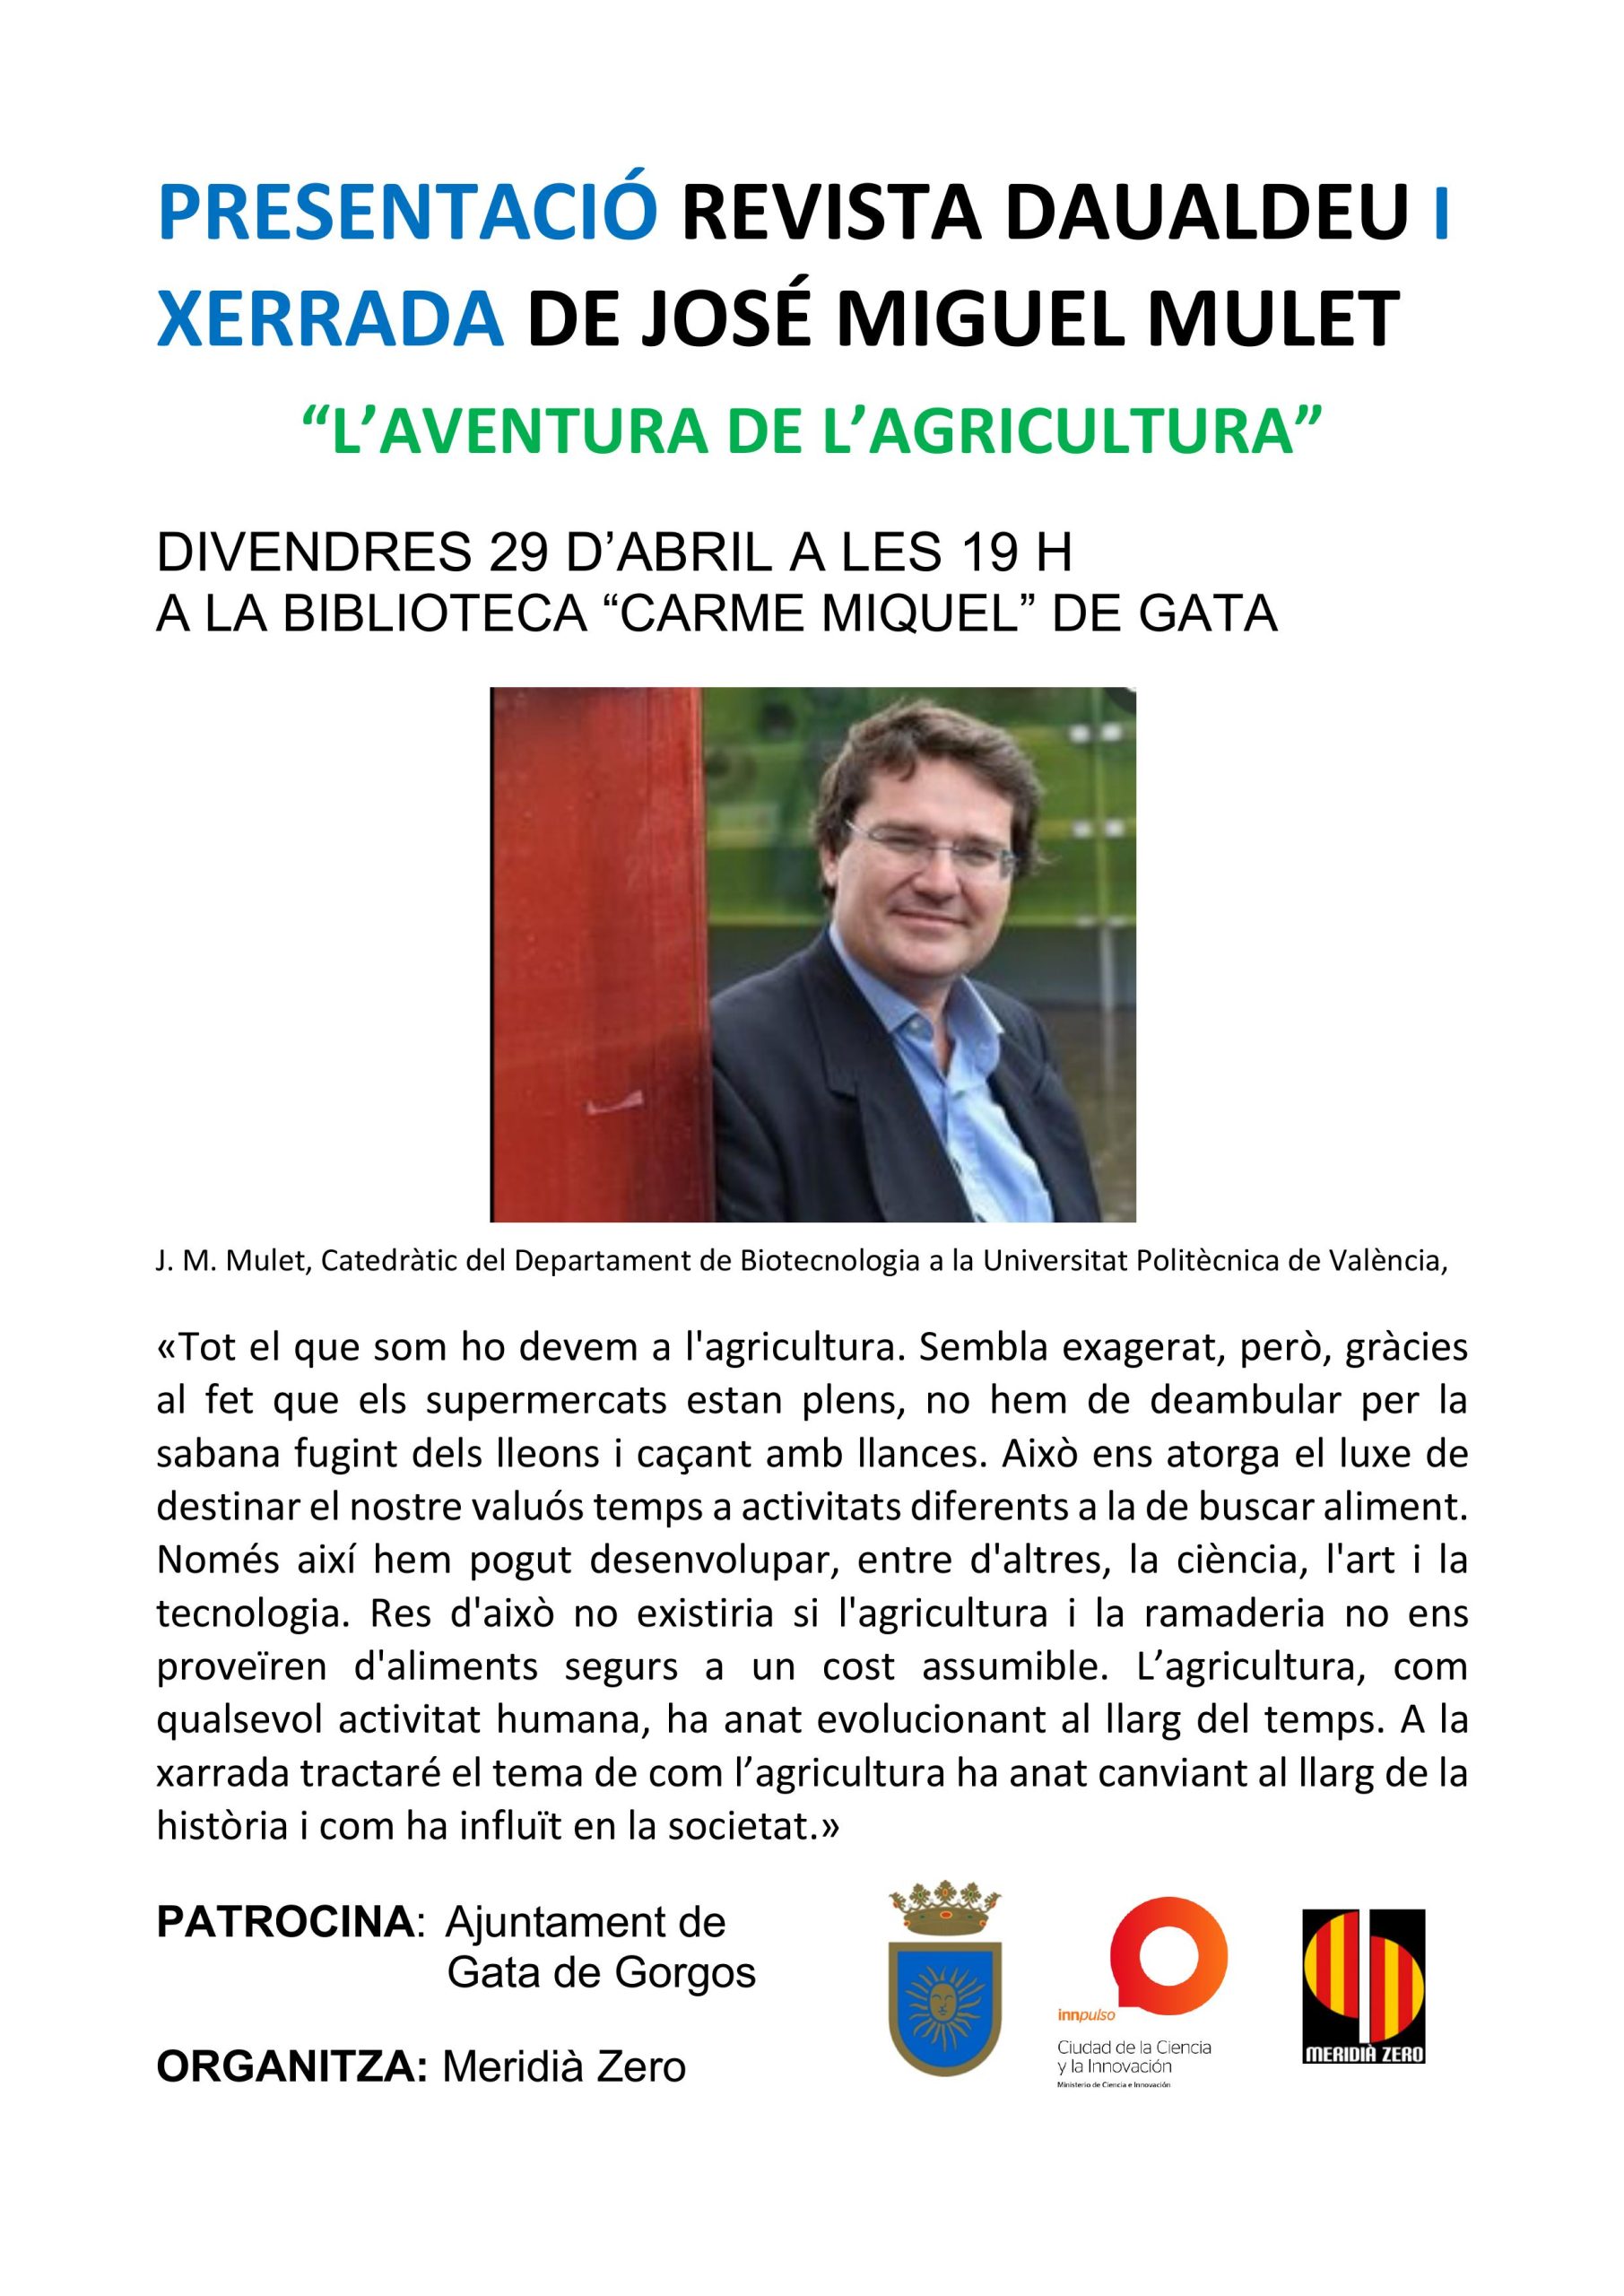 Presentació de la revista DauAlDeu i xerrada de José Migule Mulet